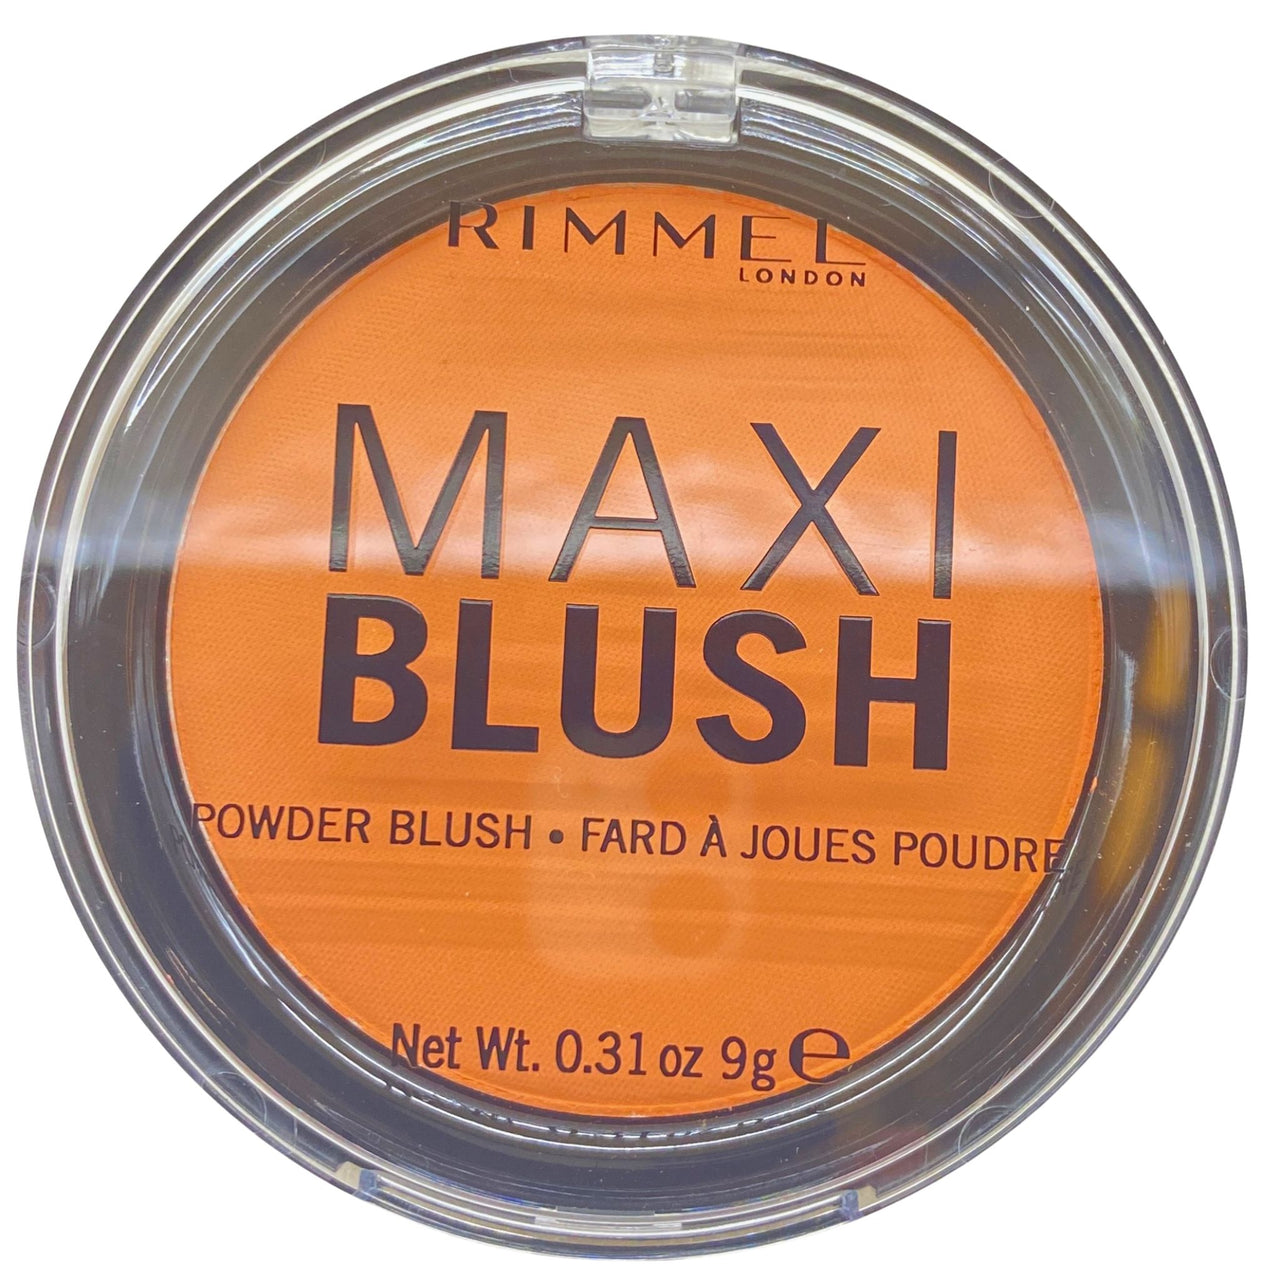 Rimmel Maxi Blush Powder Blush 004 Sweet Cheeks 